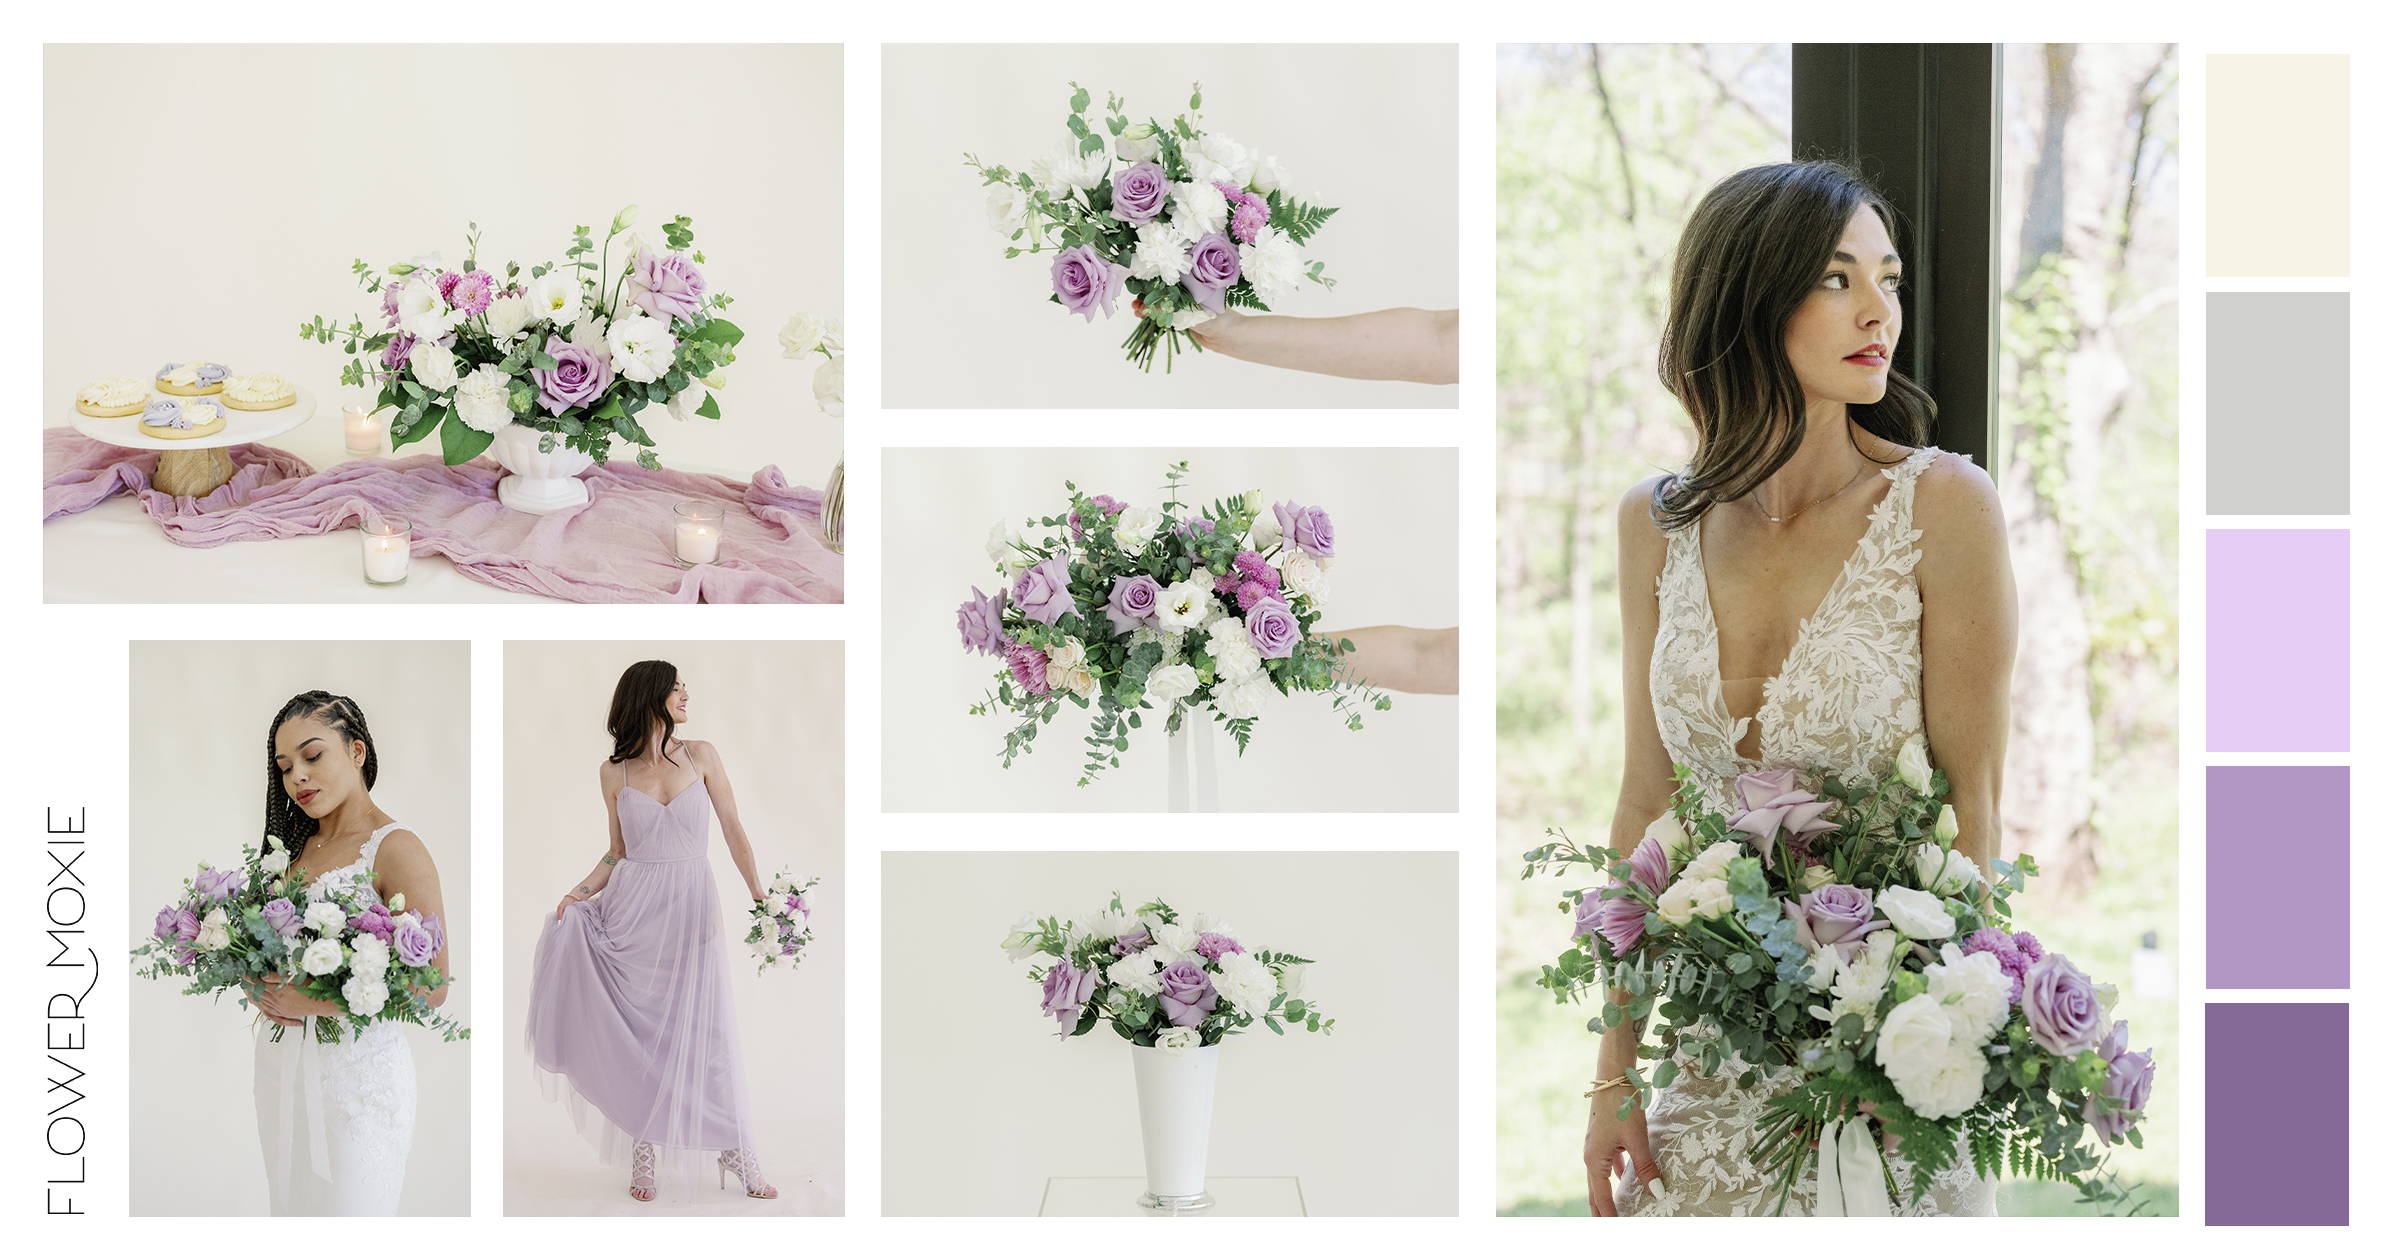 Lavender and Cream DIY wedding kit